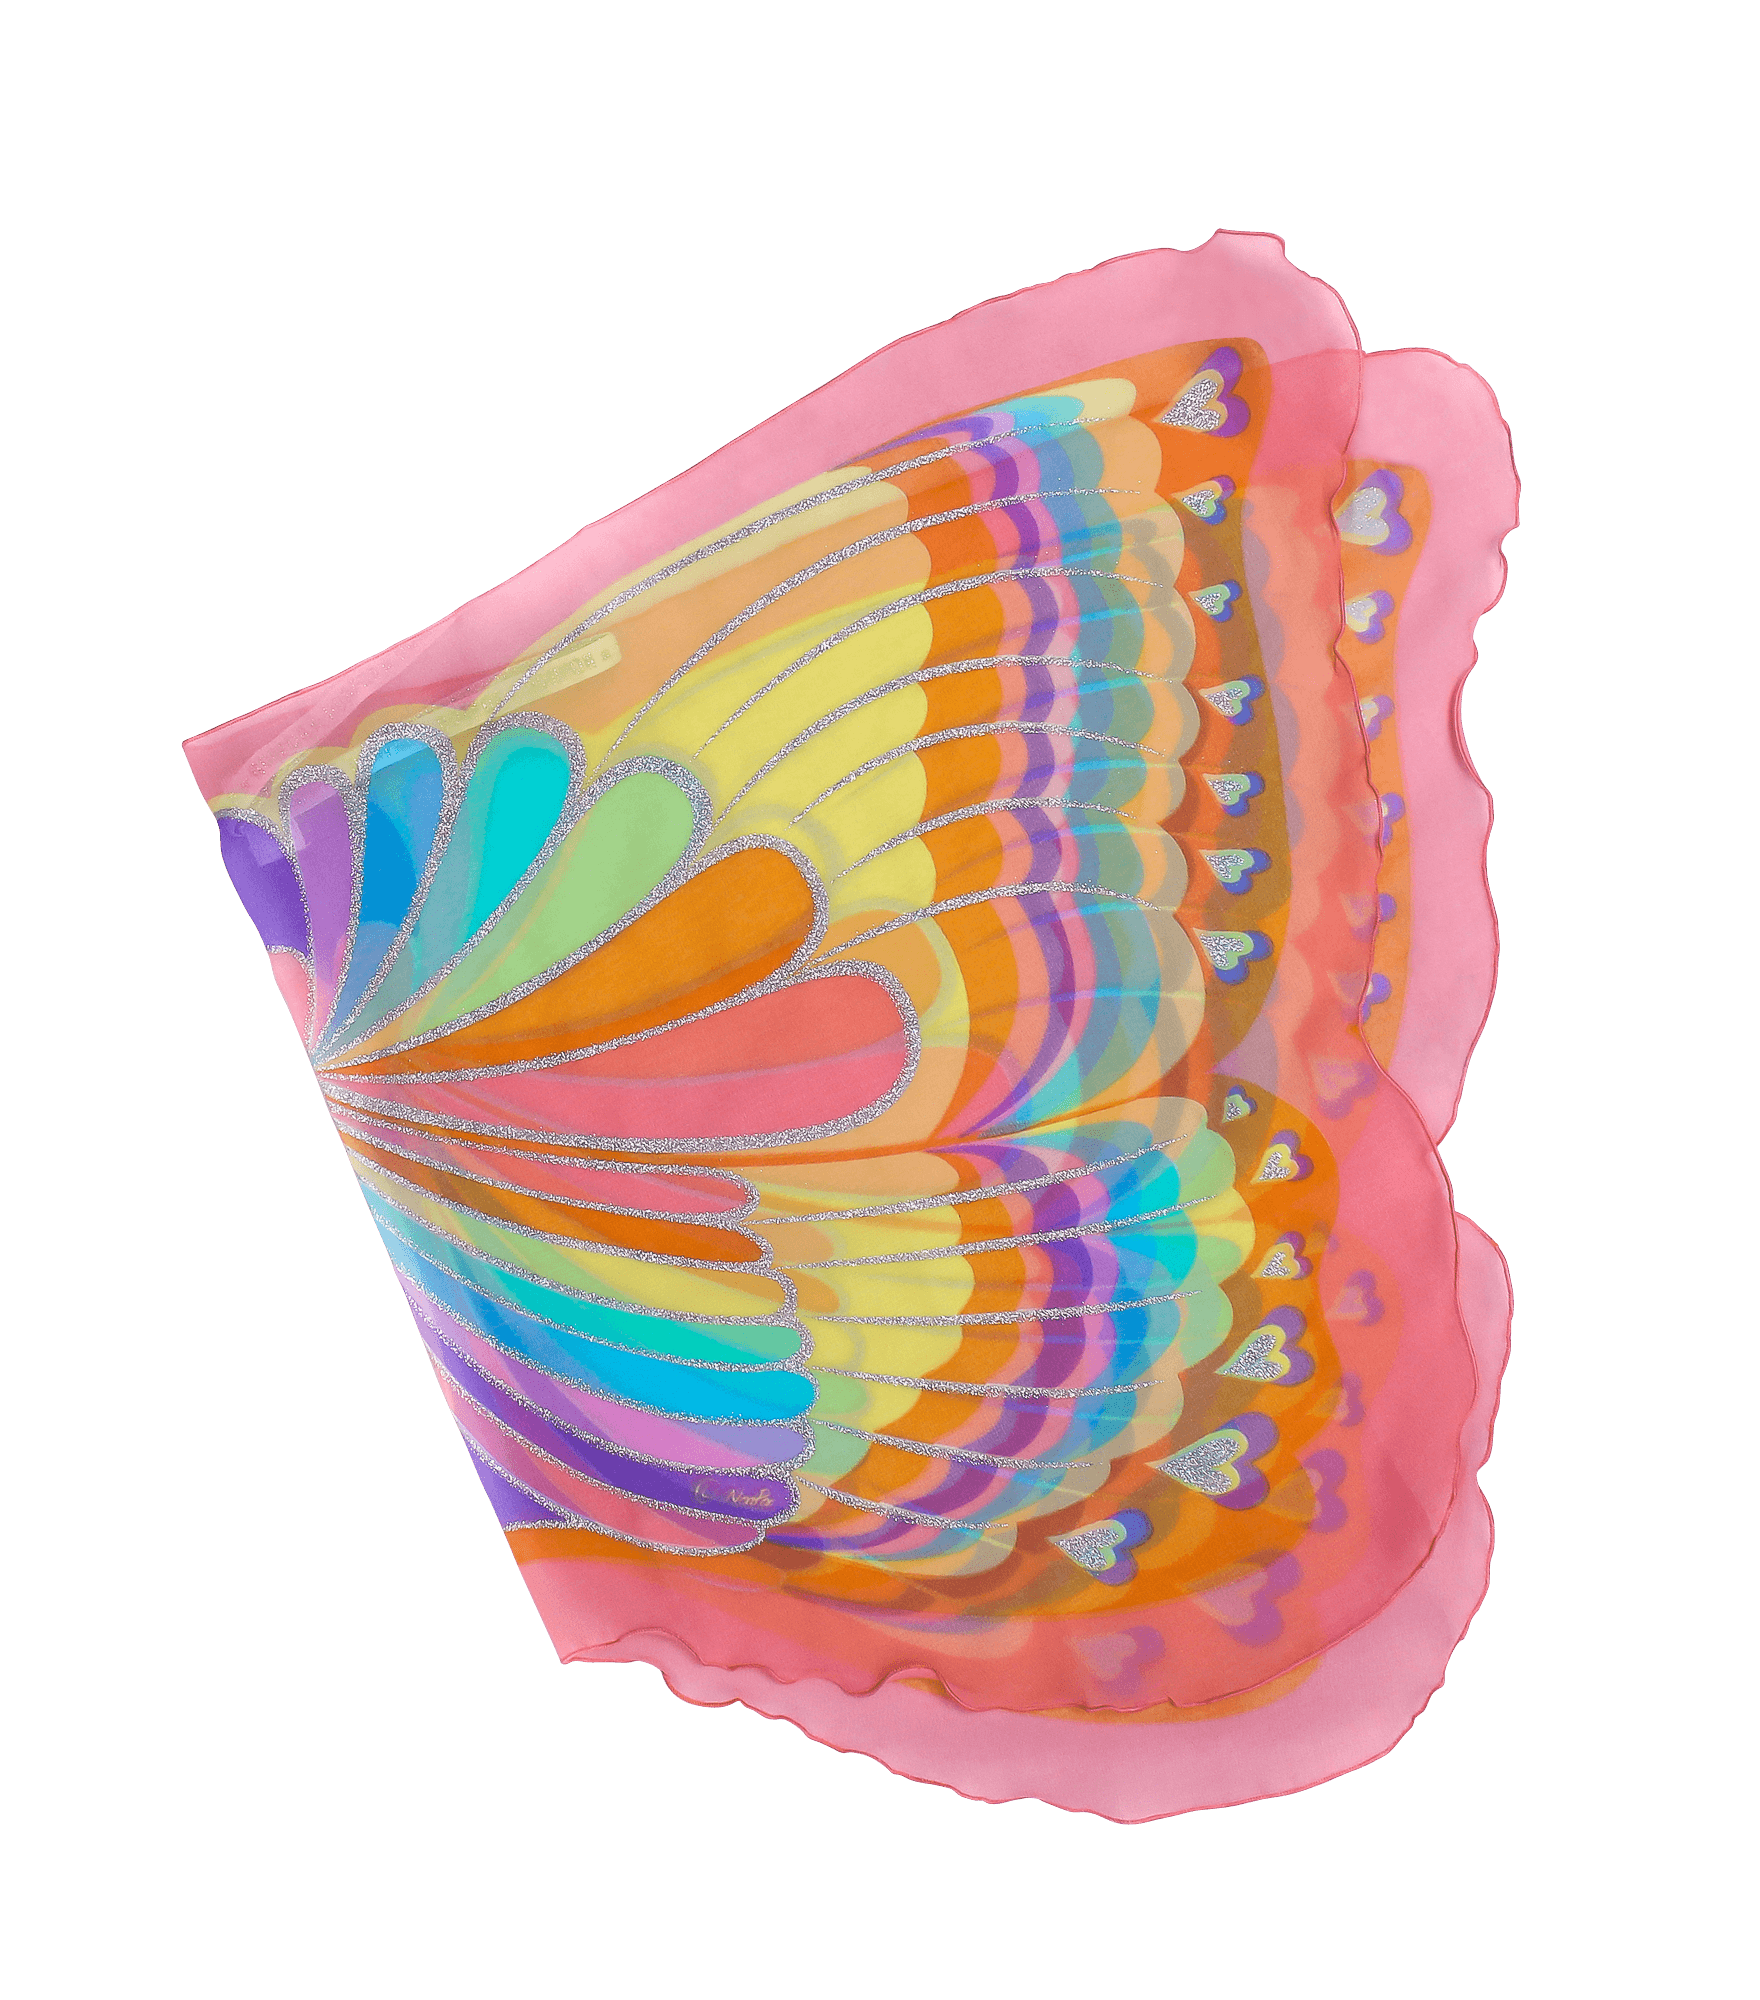 Pink Rainbow Butterfly Wings